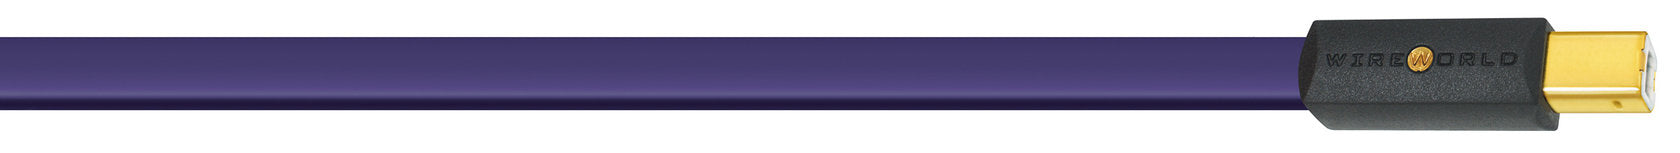 WireWorld Ultraviolet 8 USB 3.0, A -&gt; B, 1 m